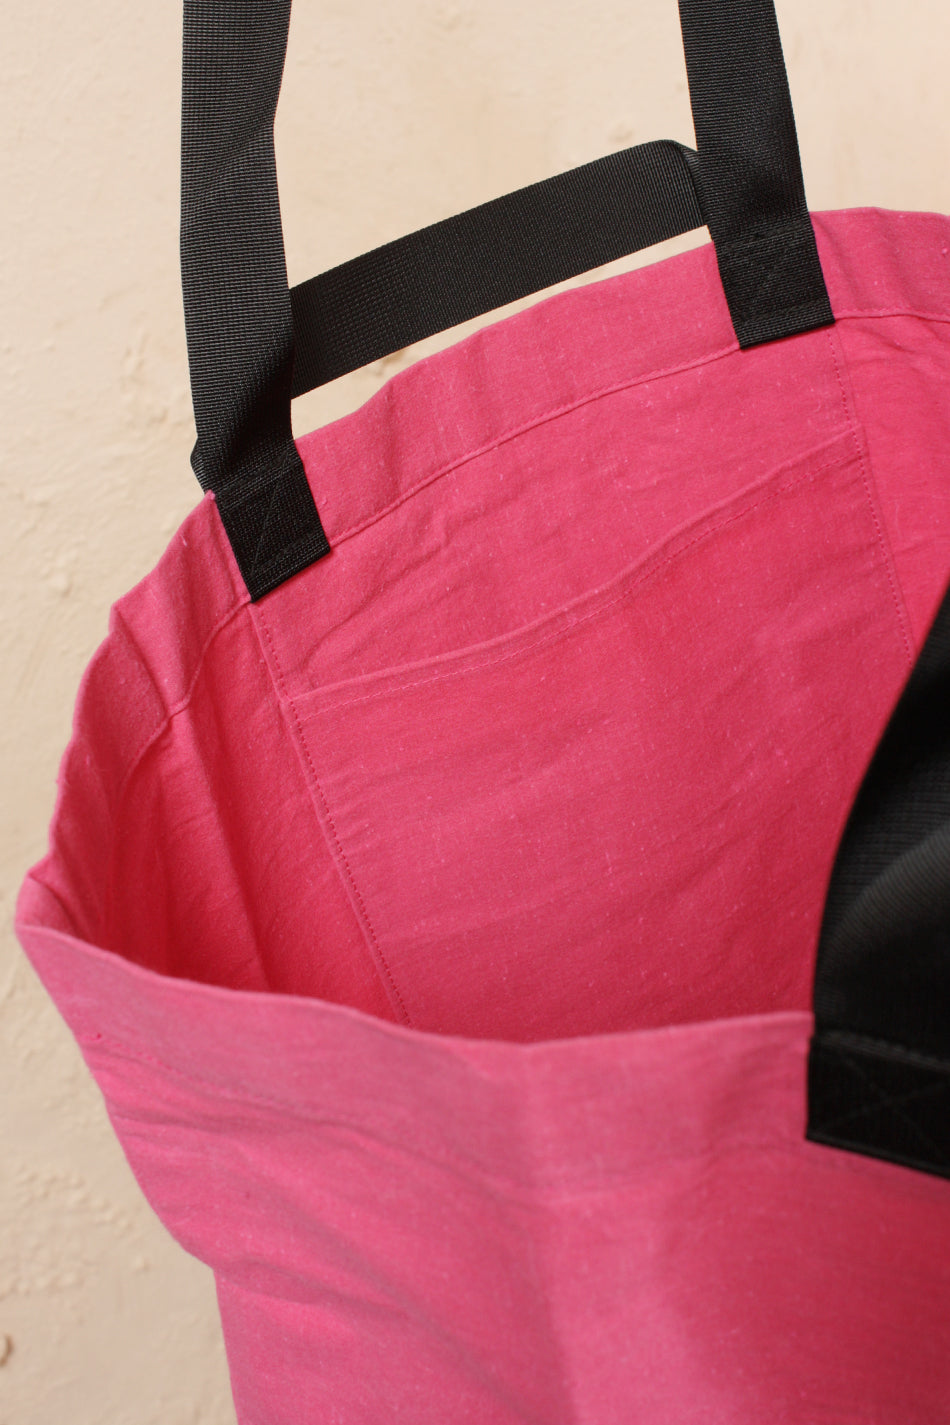 Large Tote Bag Pink